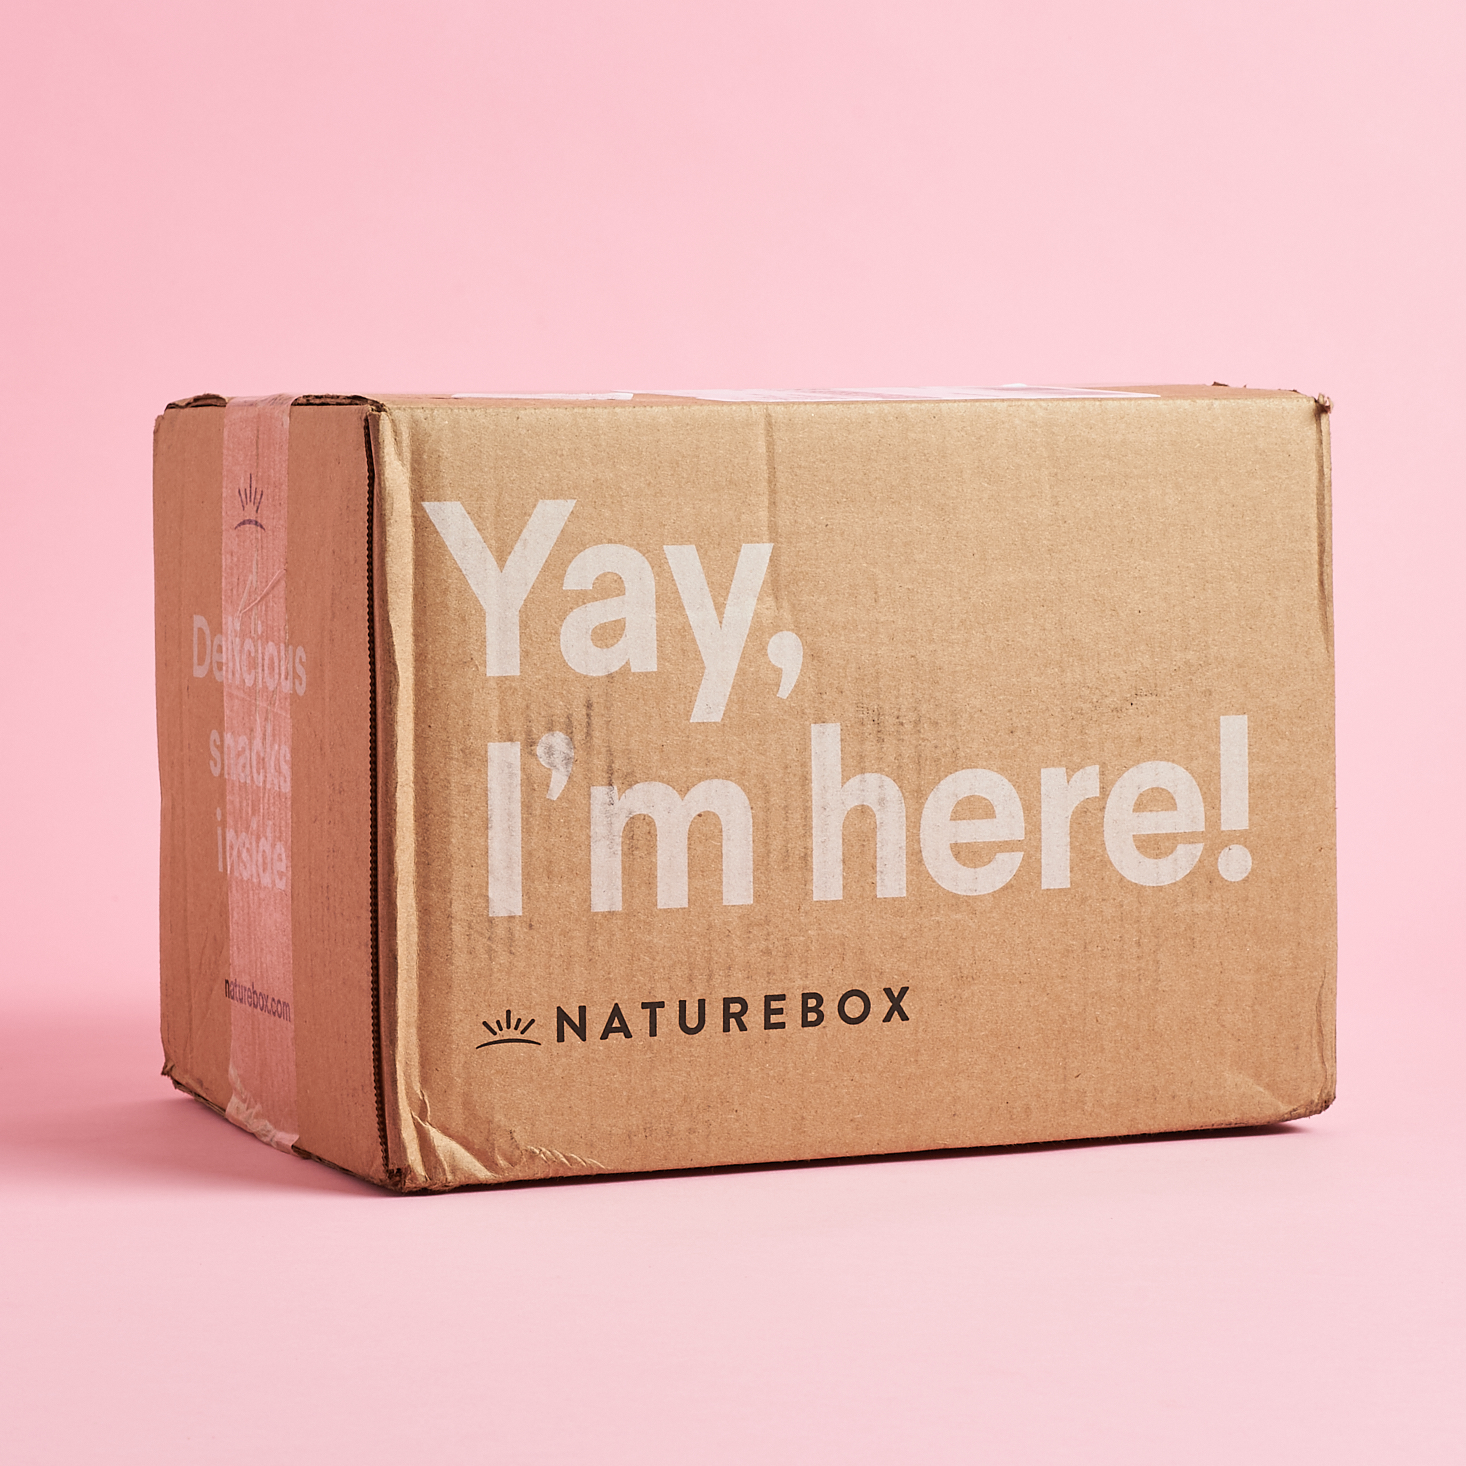 Naturebox October 2020 shipping box